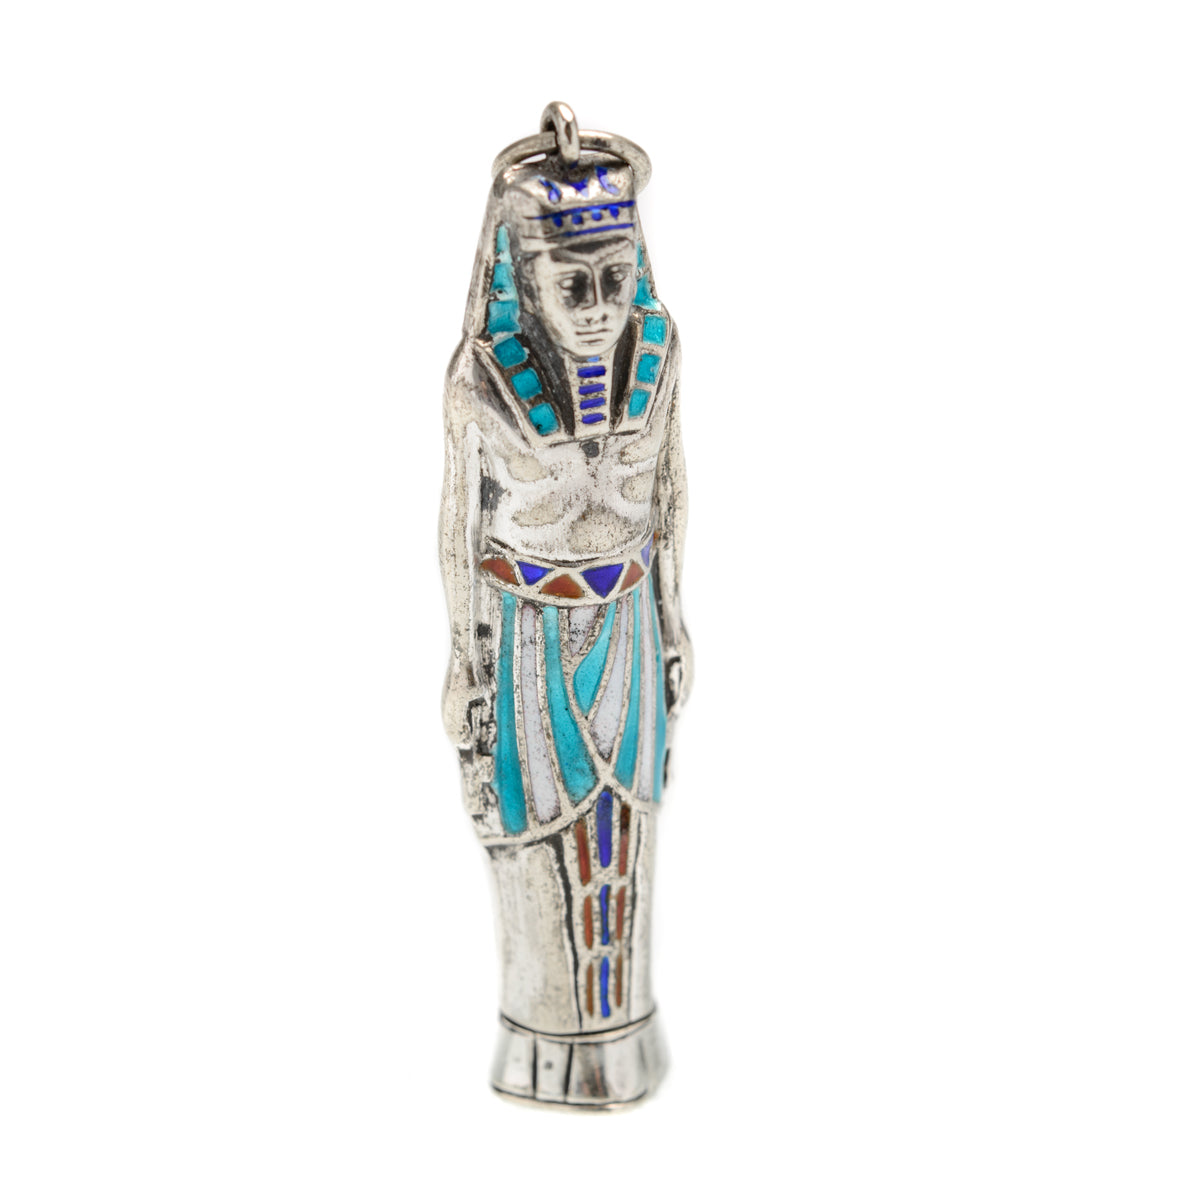 Art Deco Egyptian Revival Silver & Enamel Novelty Propelling Pencil Pendant/Fob (Code A893)